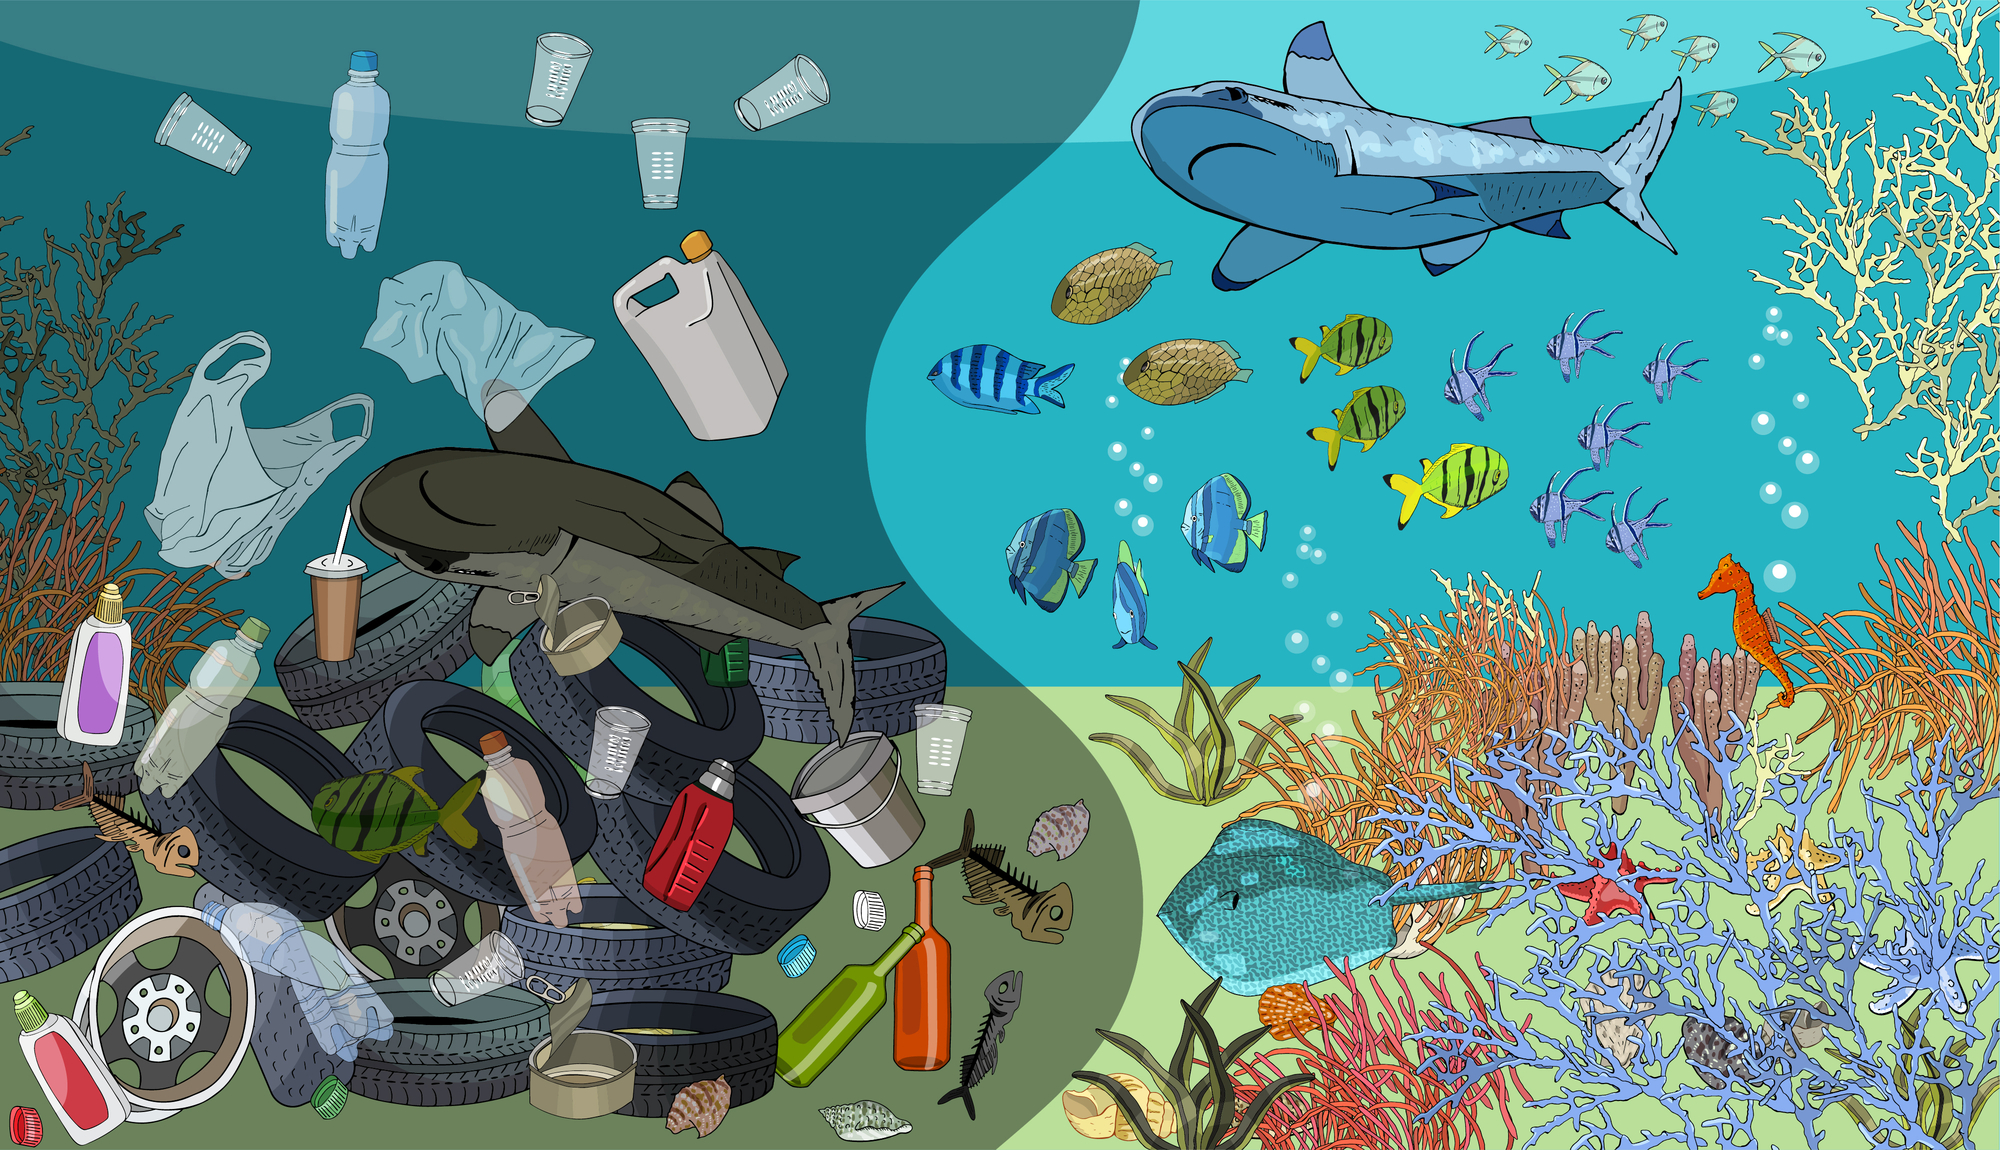 Загрязнение океана плакат